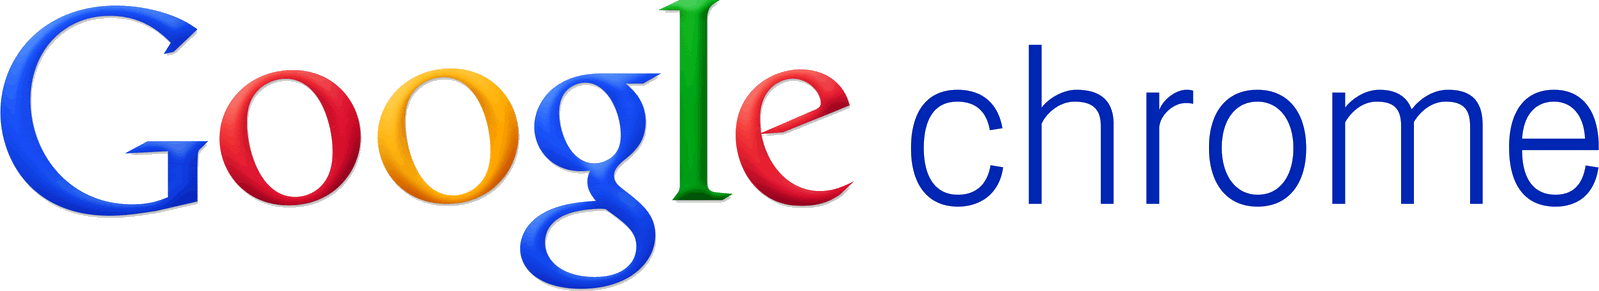 Google Chrome Transparent File